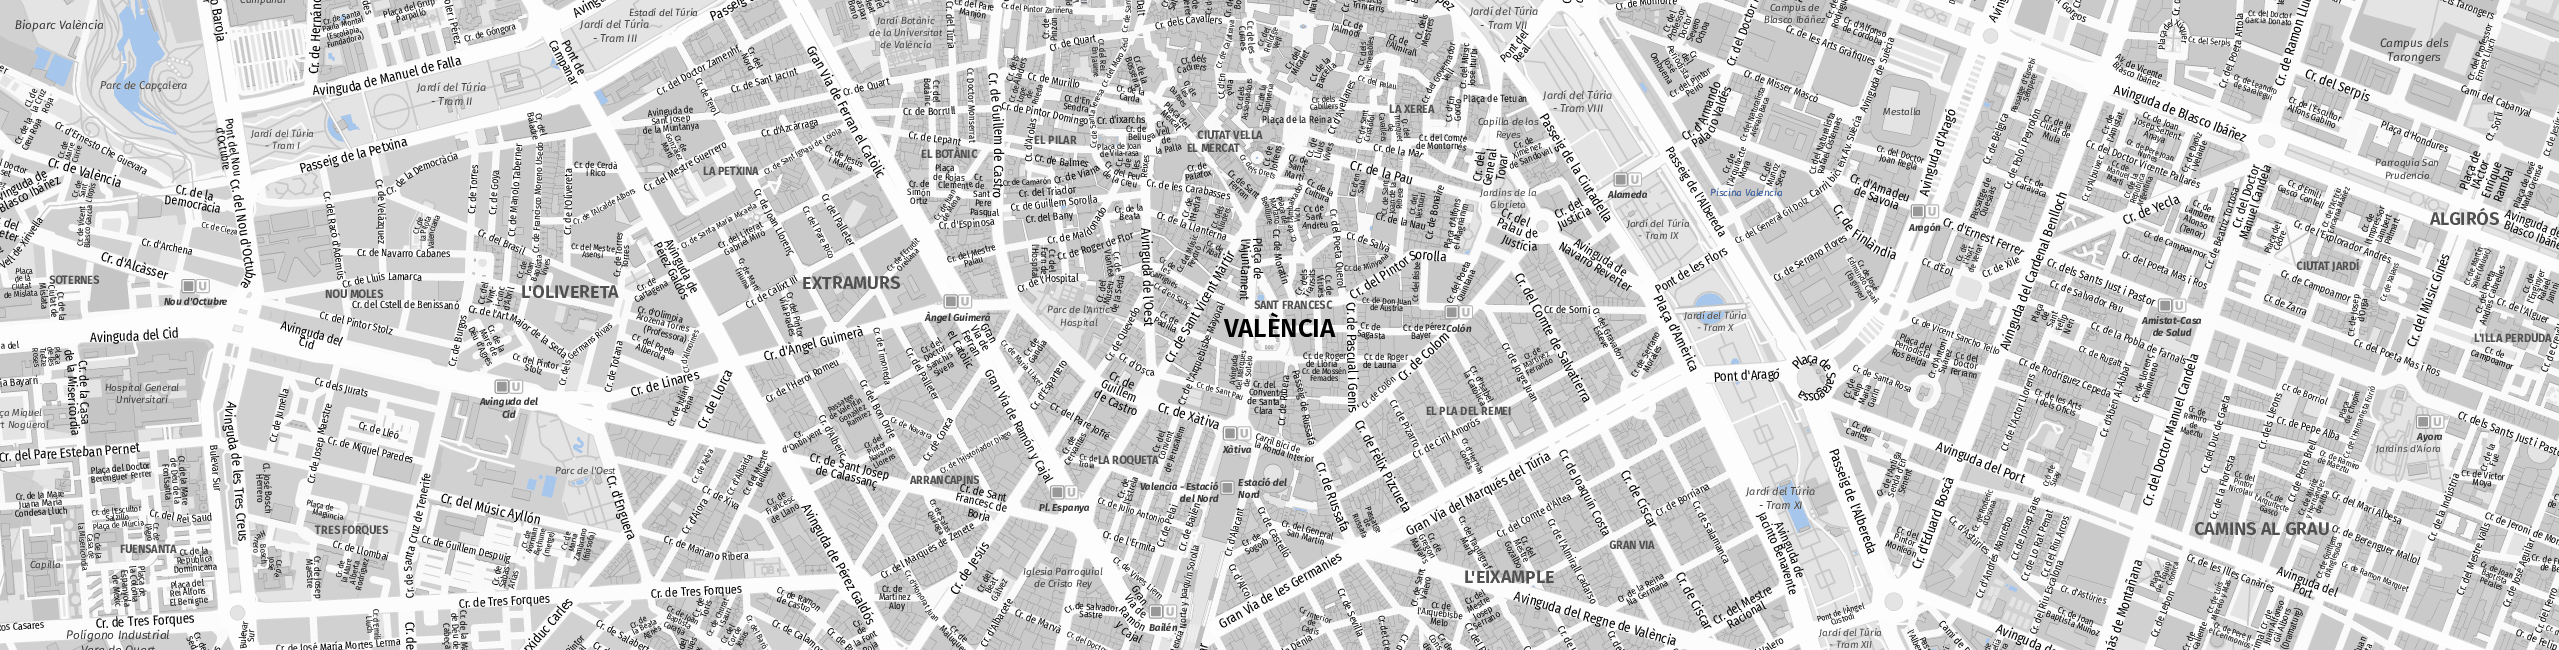 Stadtplan Valencia zum Downloaden.